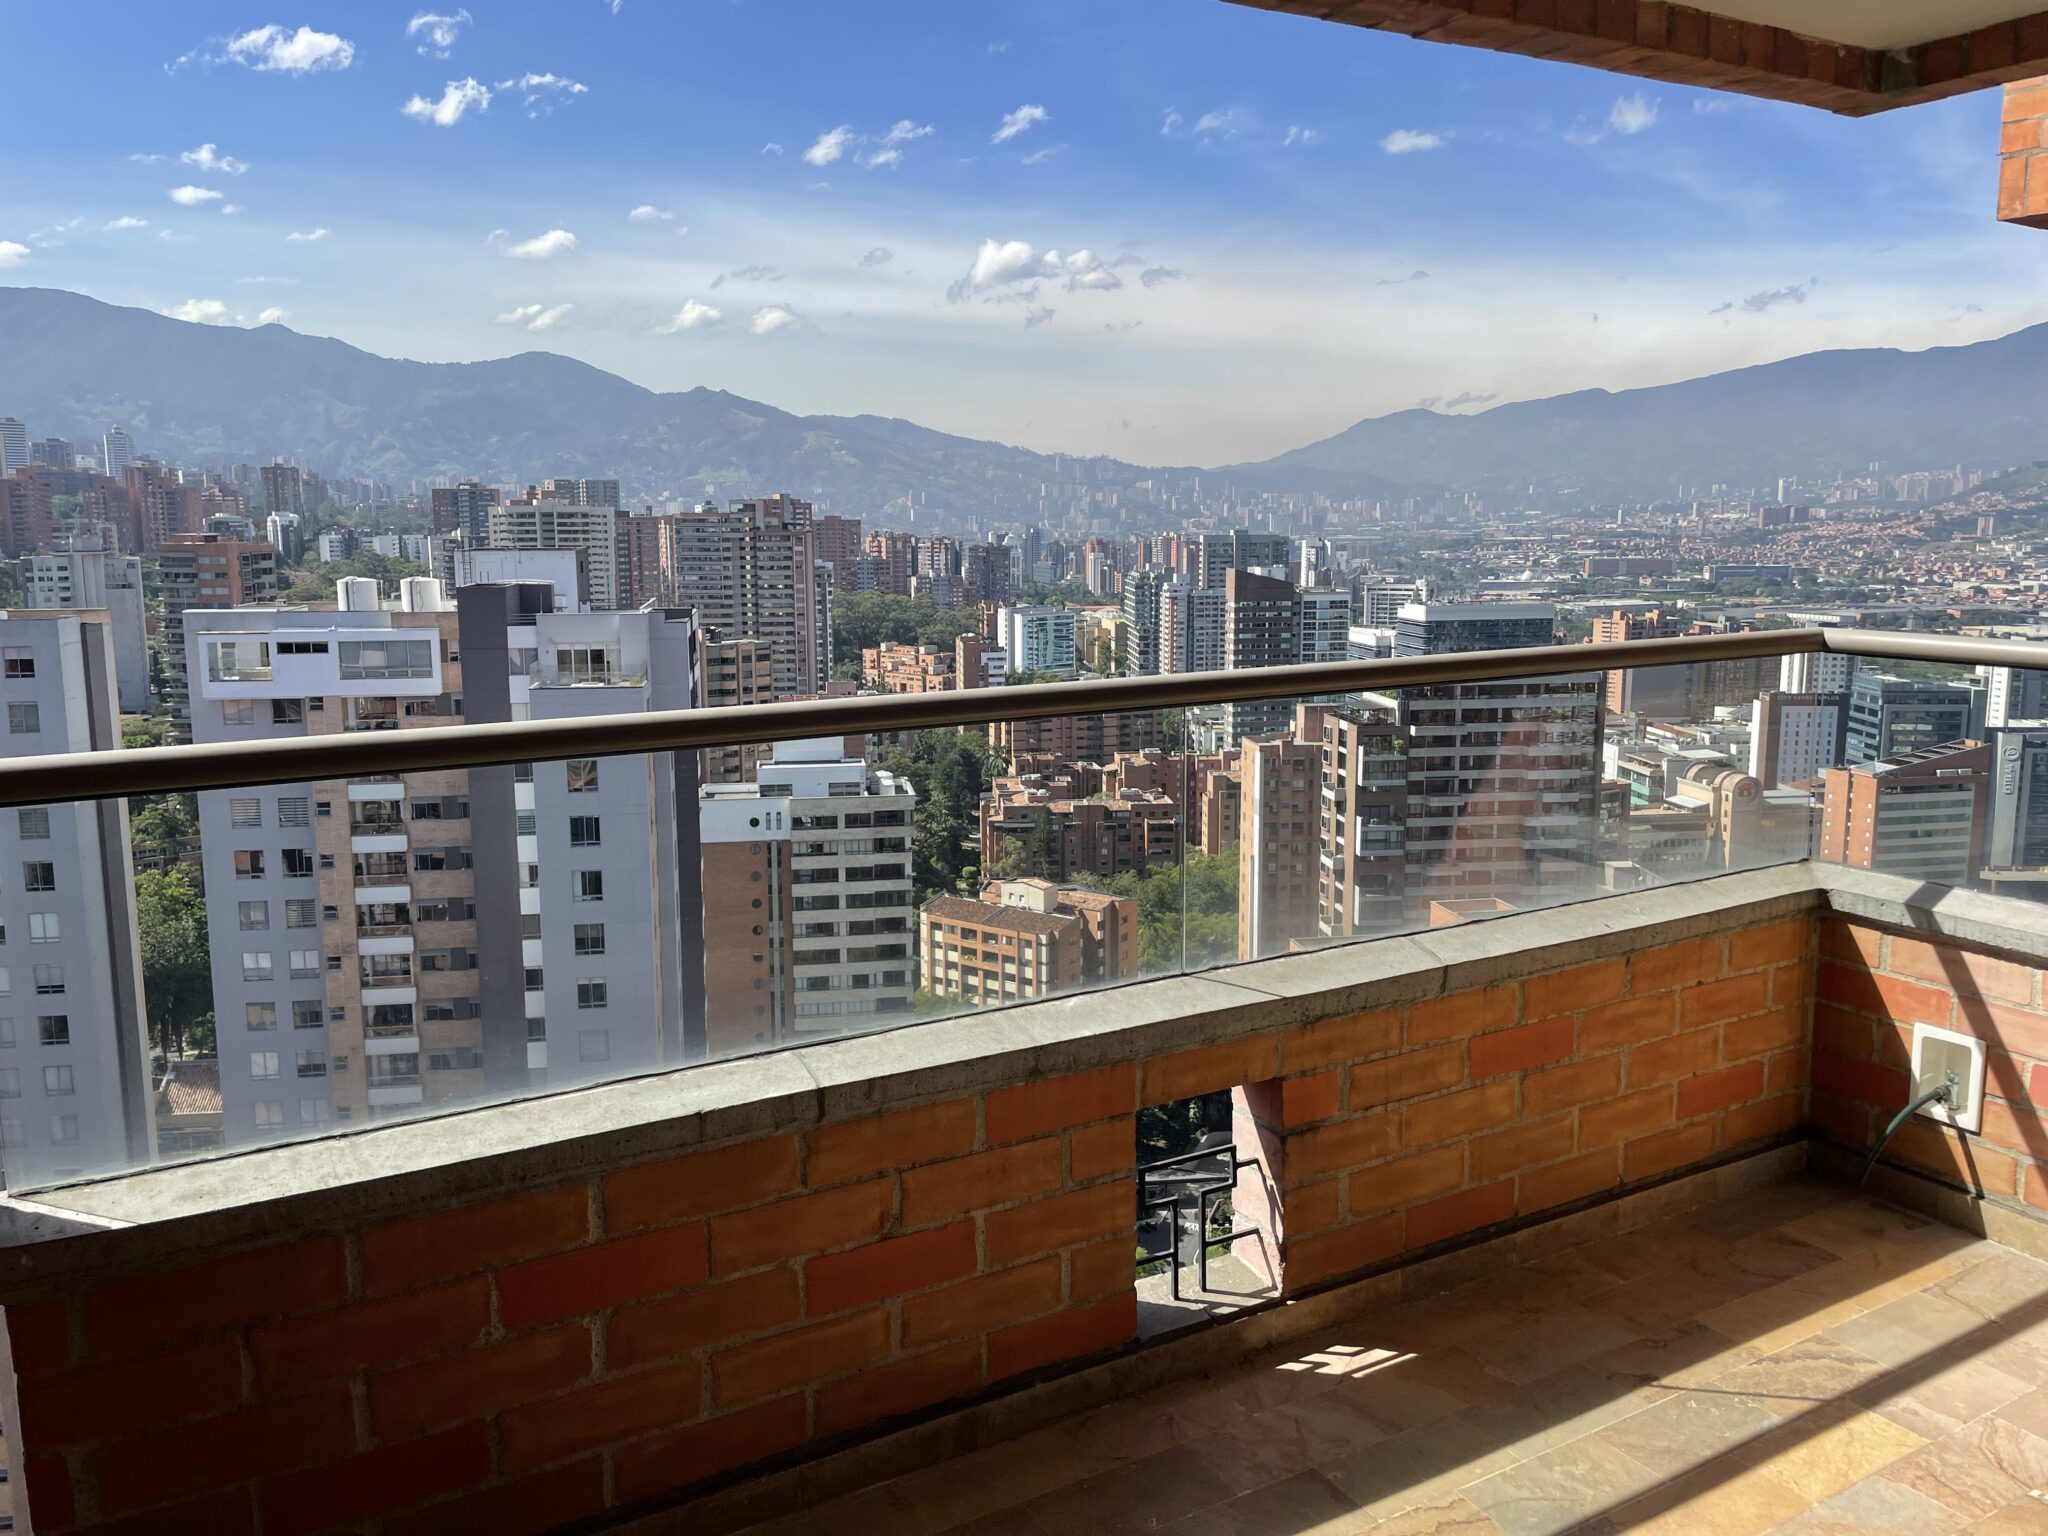 3BR El Poblado Apartment With Multiple Balconies and Skyscraper Views; Walkable to the Golden Mile or Provenza